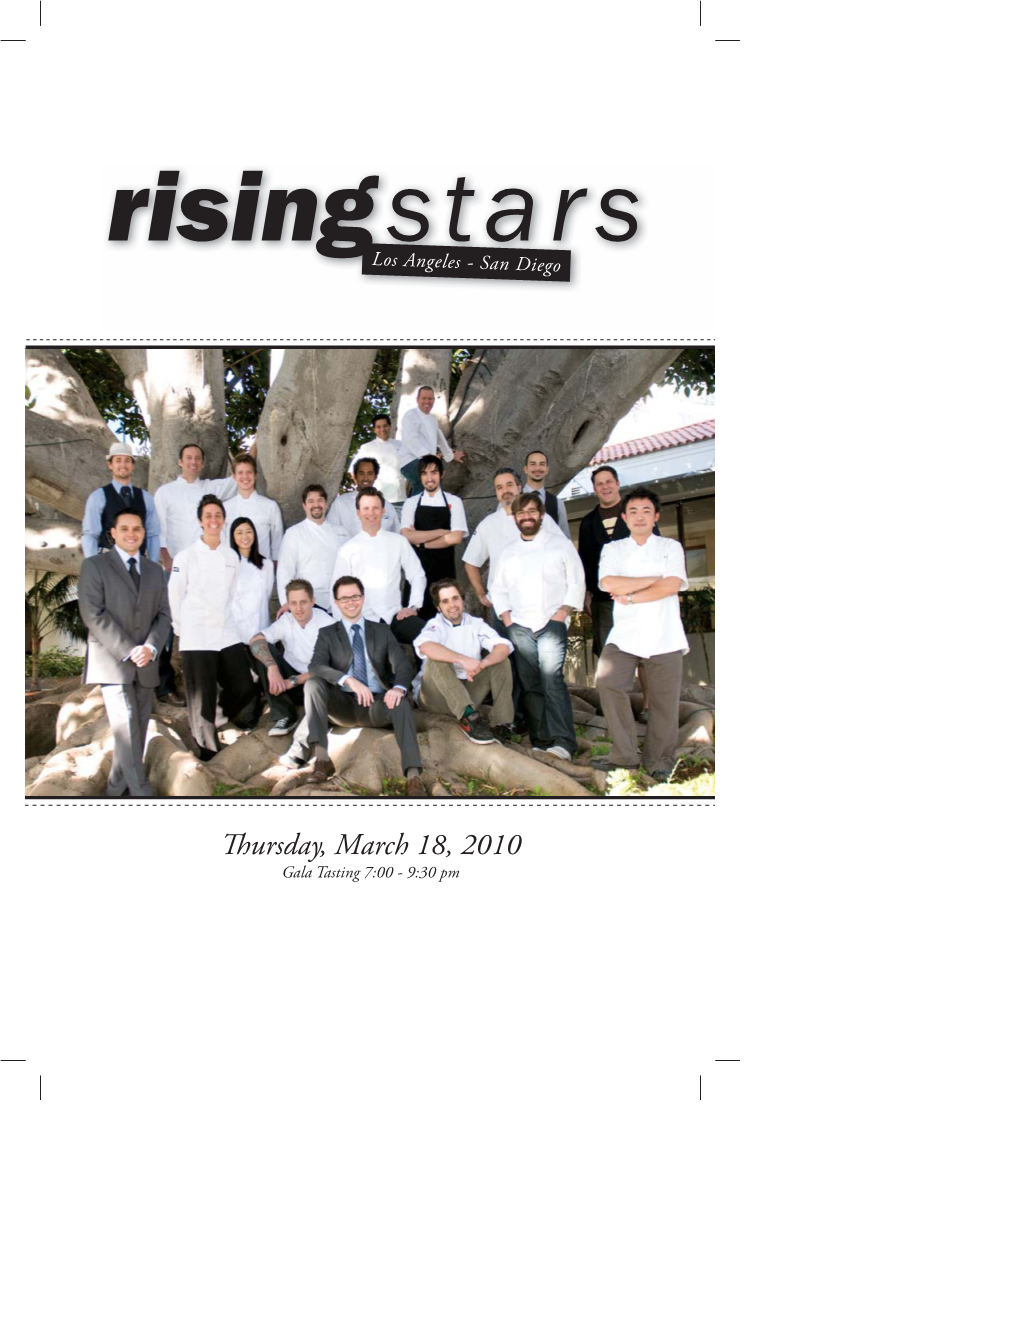 Risingstars Los Angeles - San Diego